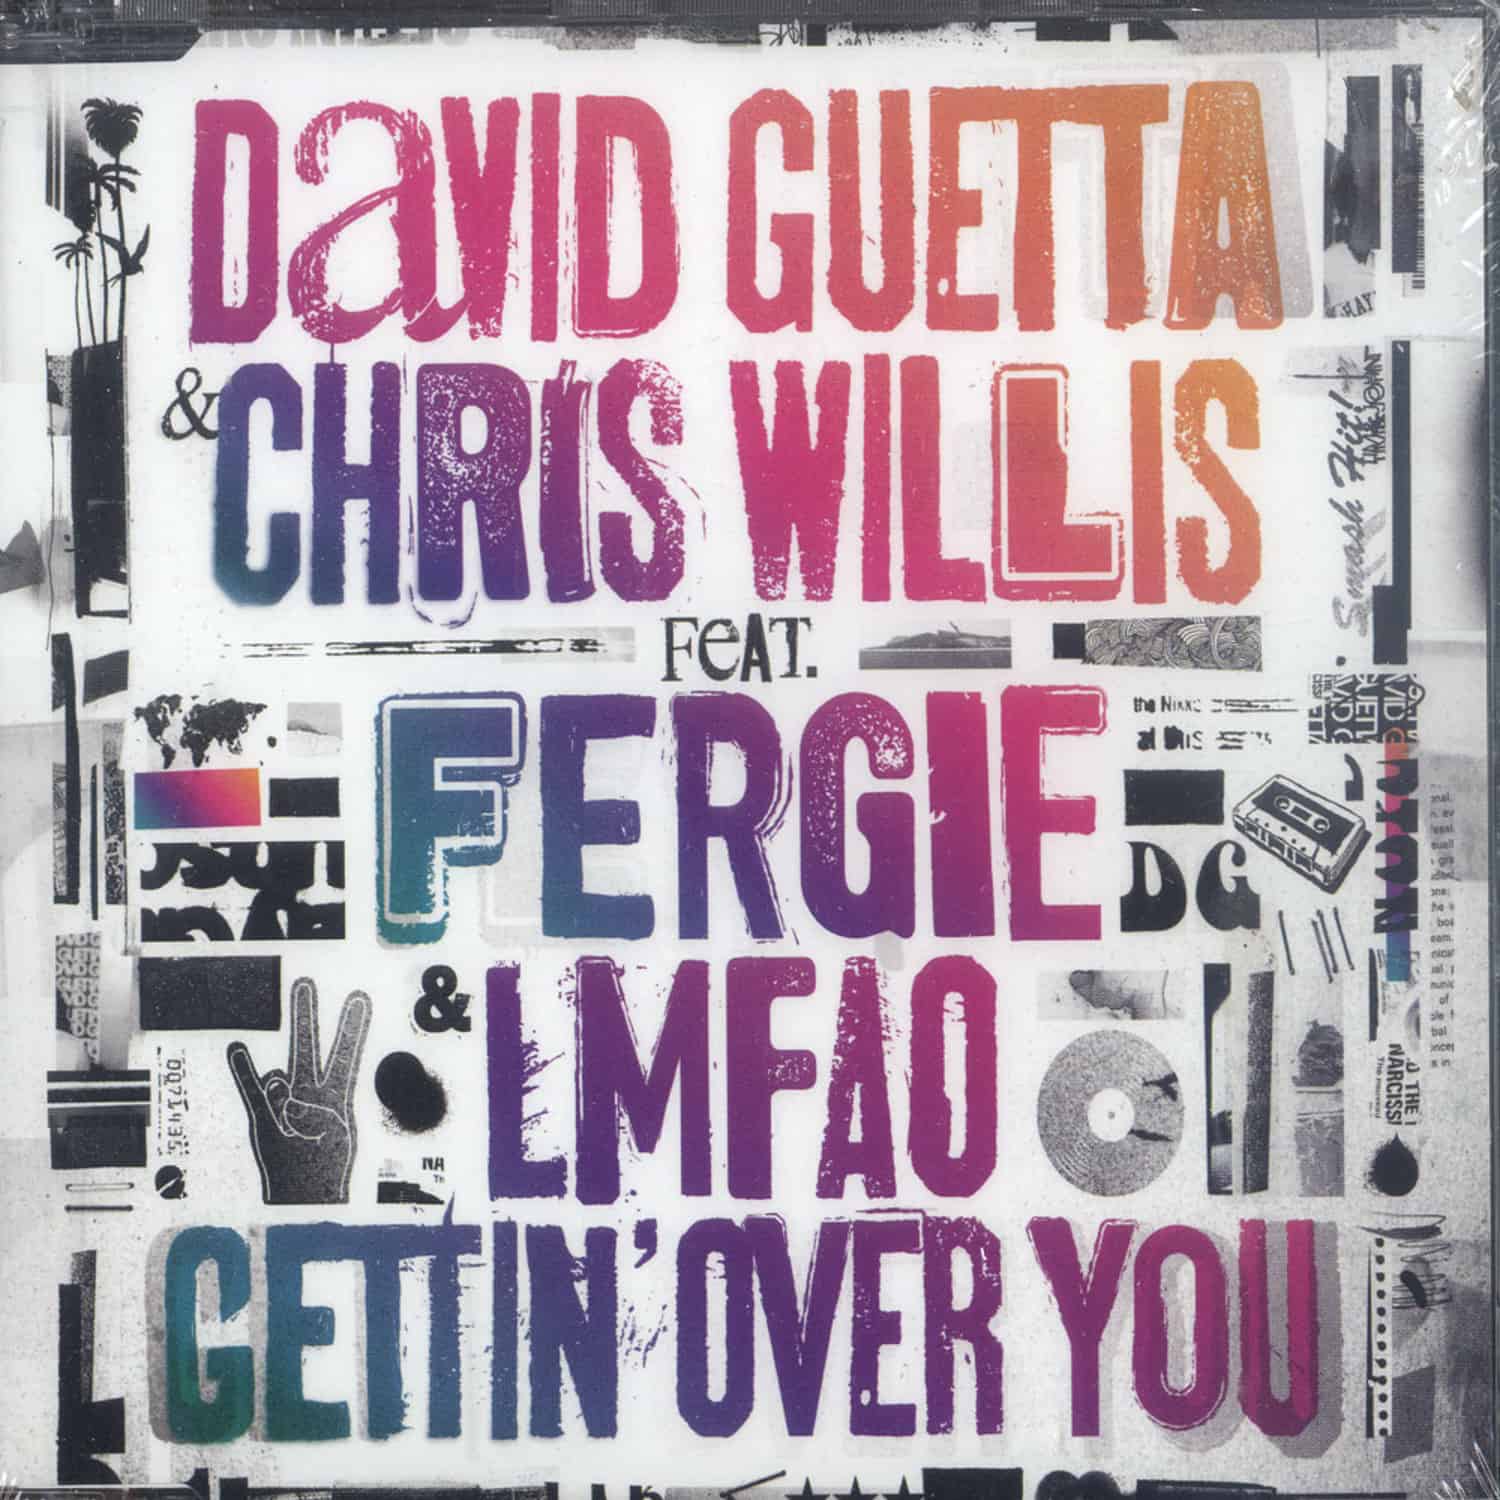 David Guetta & Chris Willis feat Fergie - GETTIN OVER YOU 